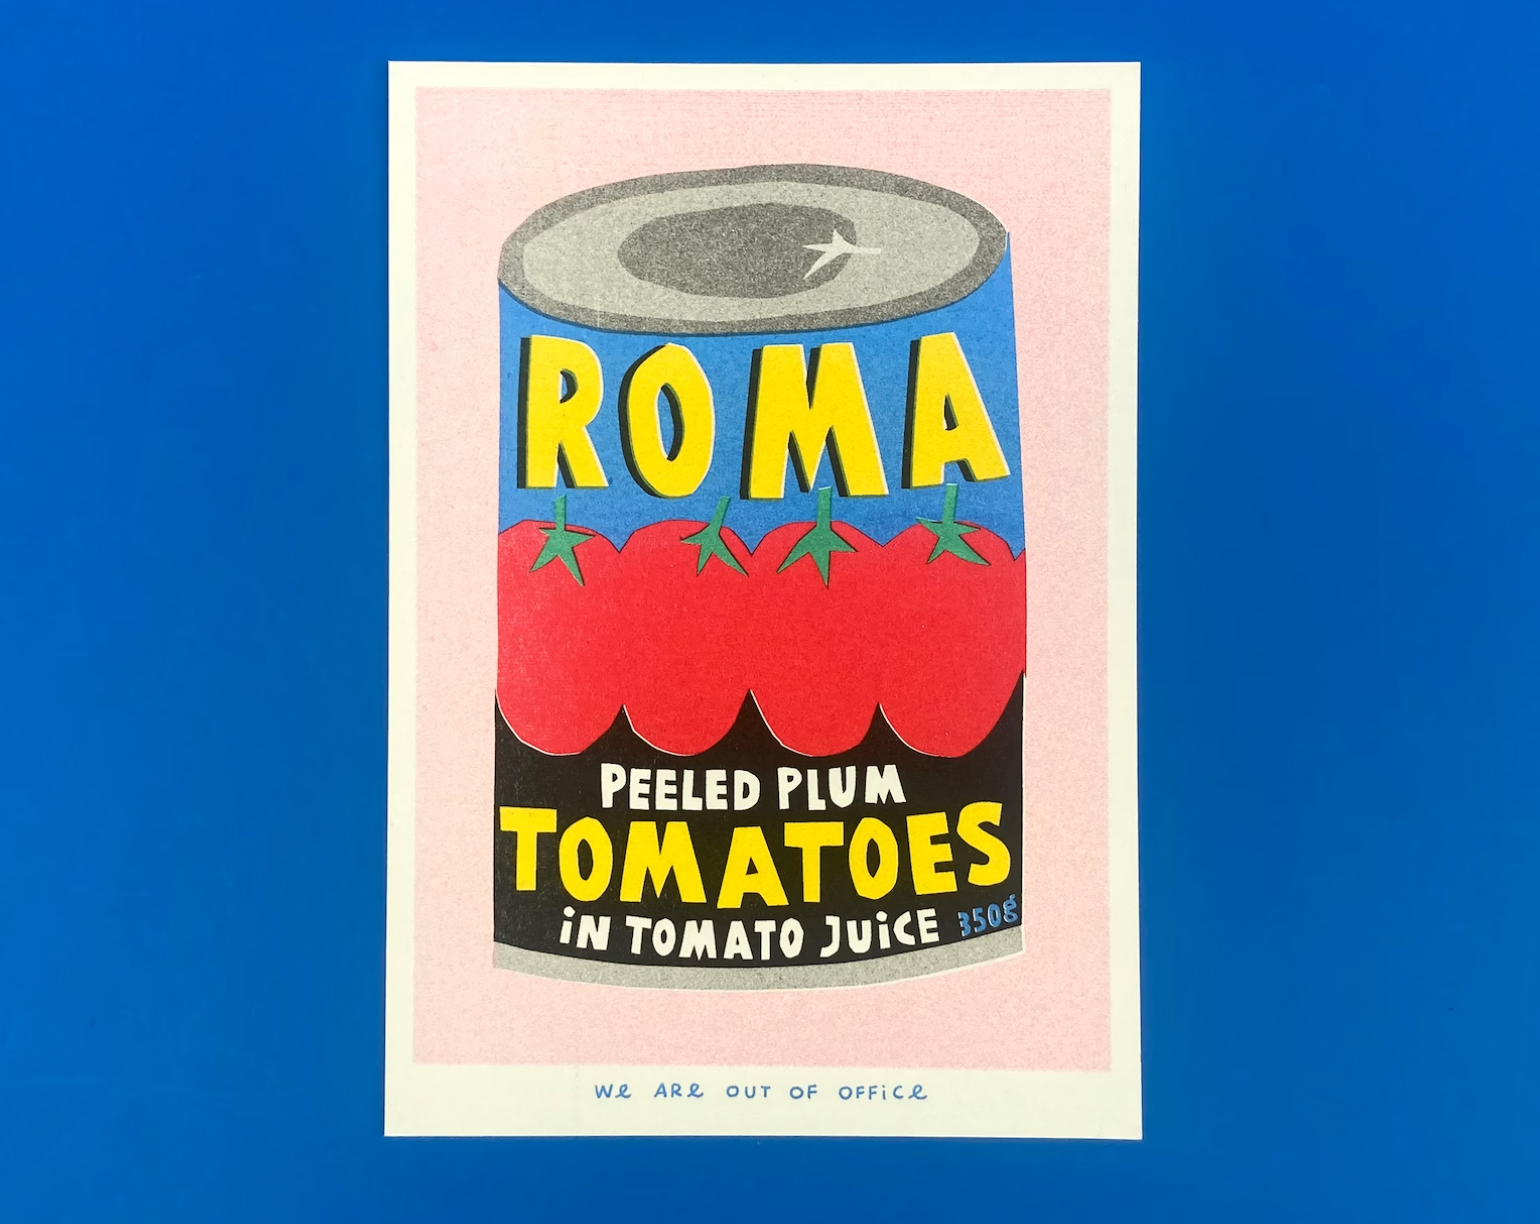 ROMA TOMATOES